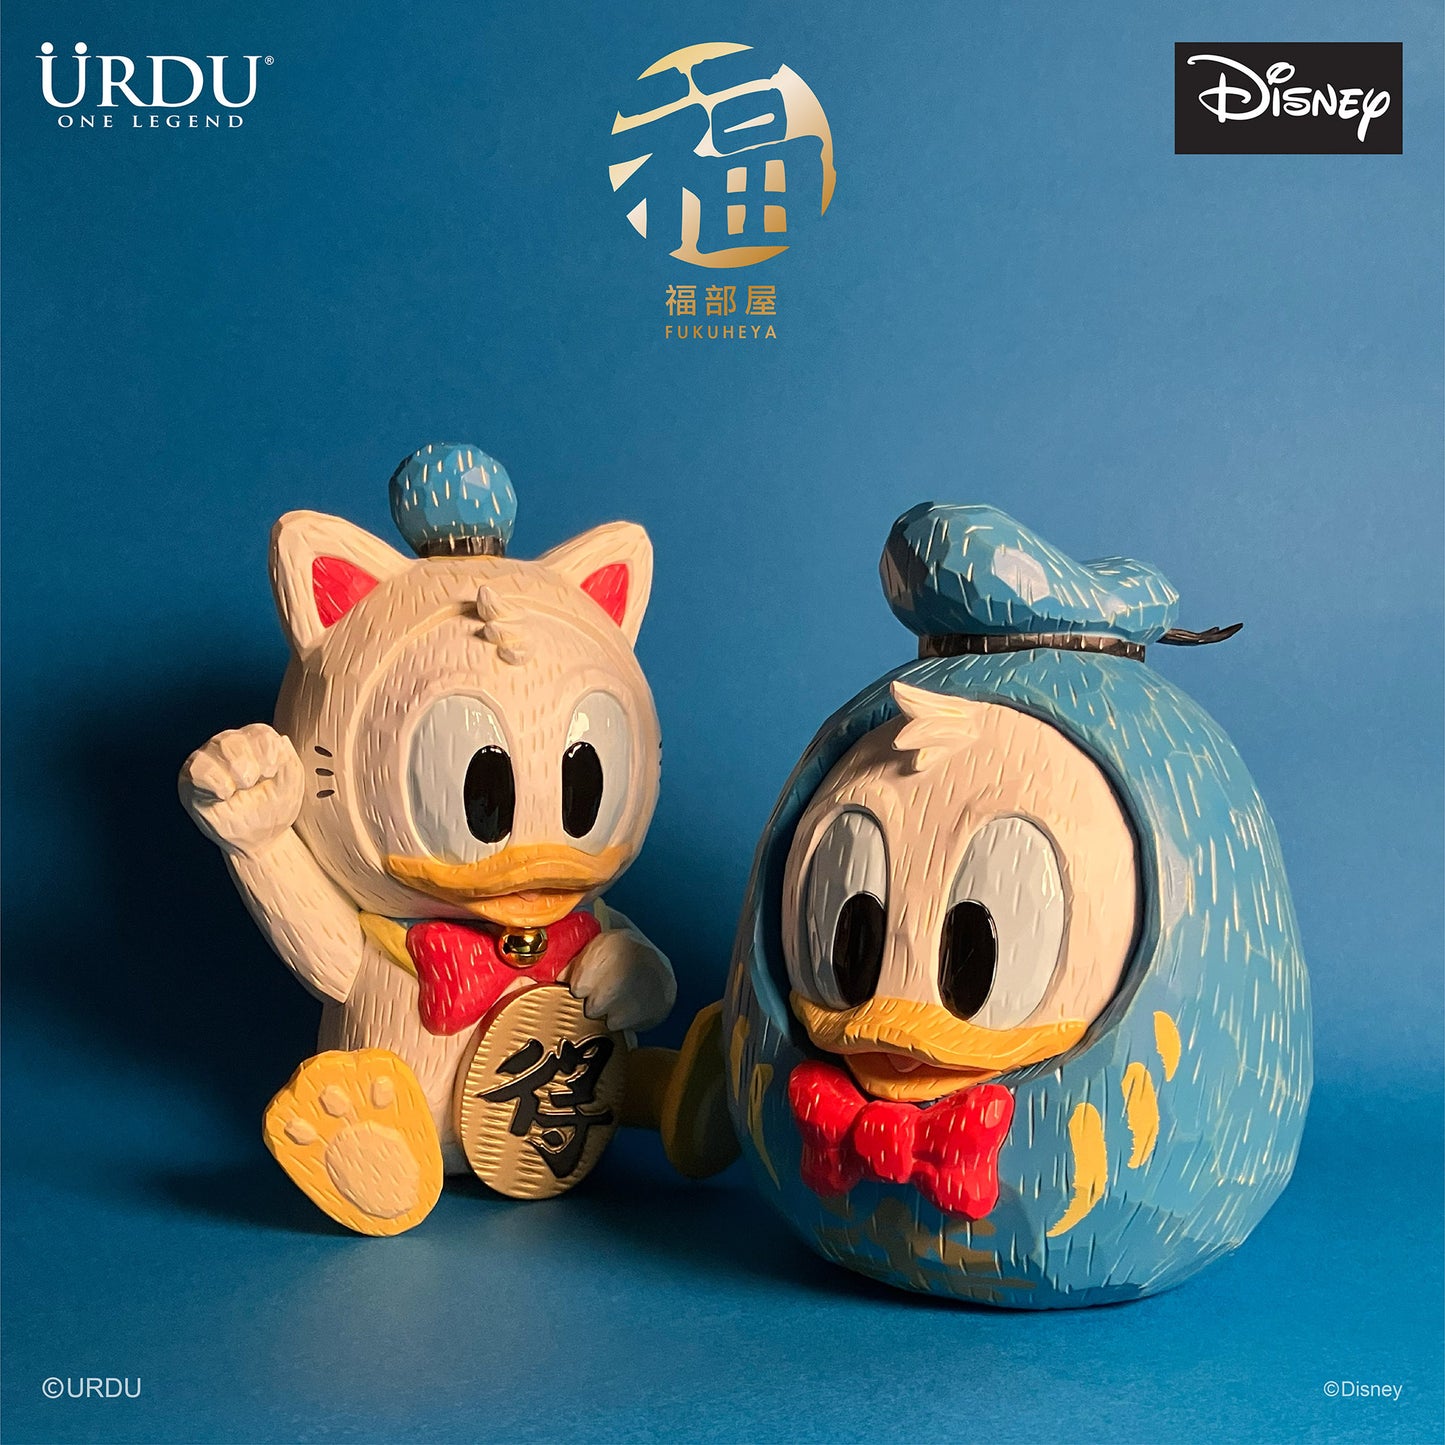 
                  
                    Fukuheya Daruma - Donald Duck (Original)
                  
                